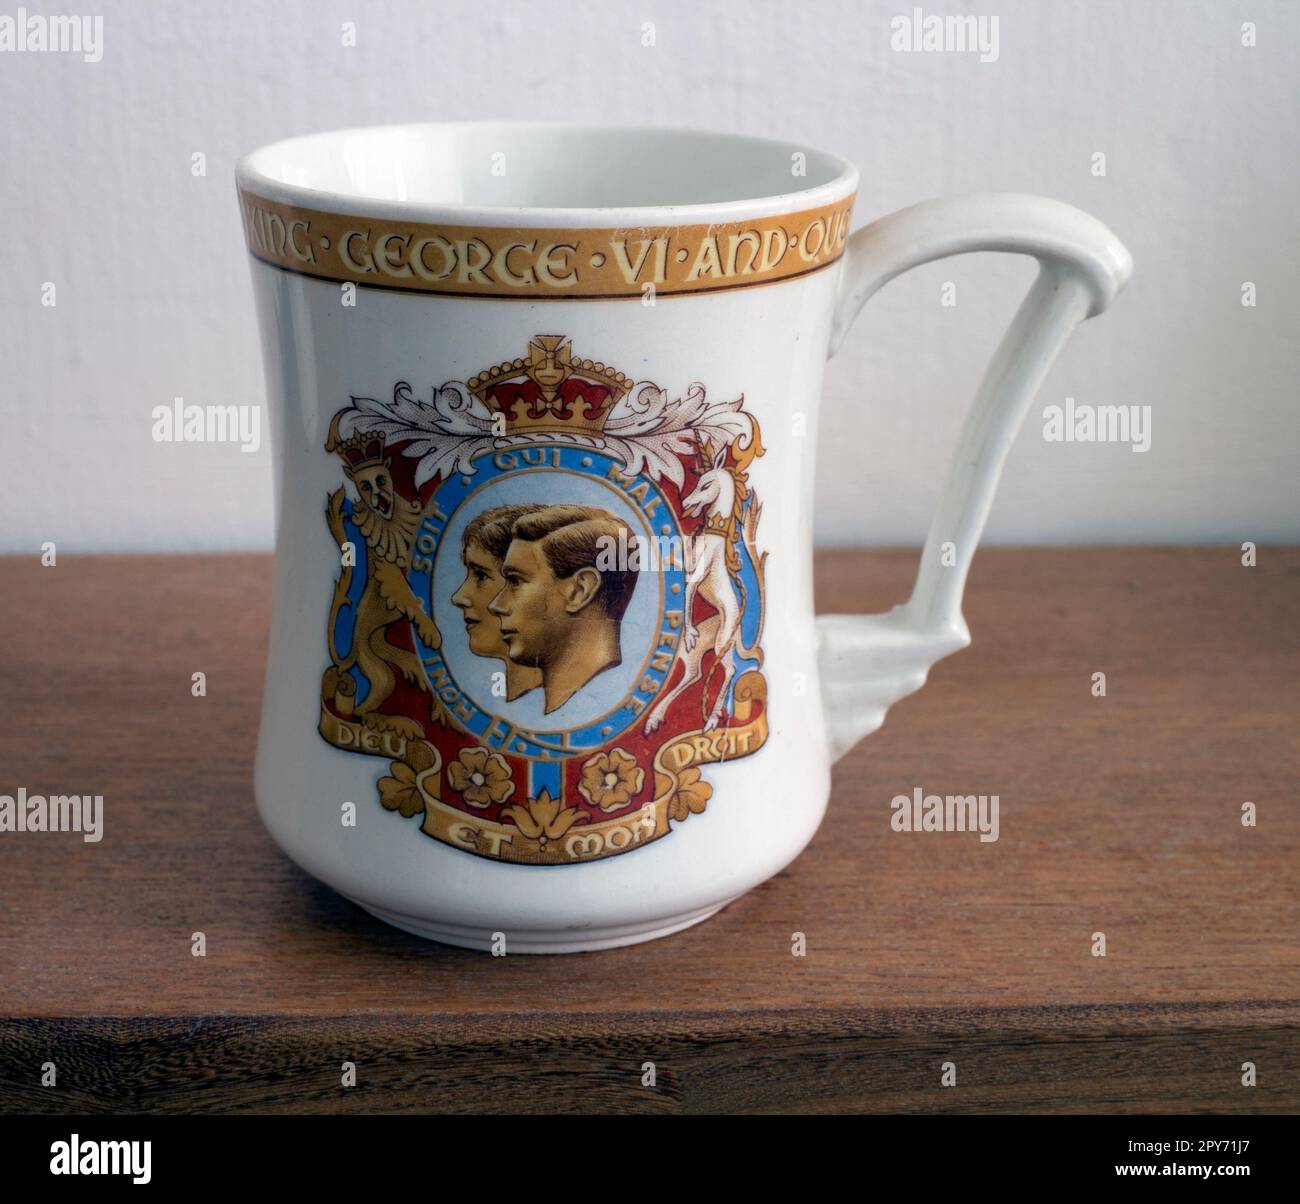 King George VI Coronation mug Stock Photo